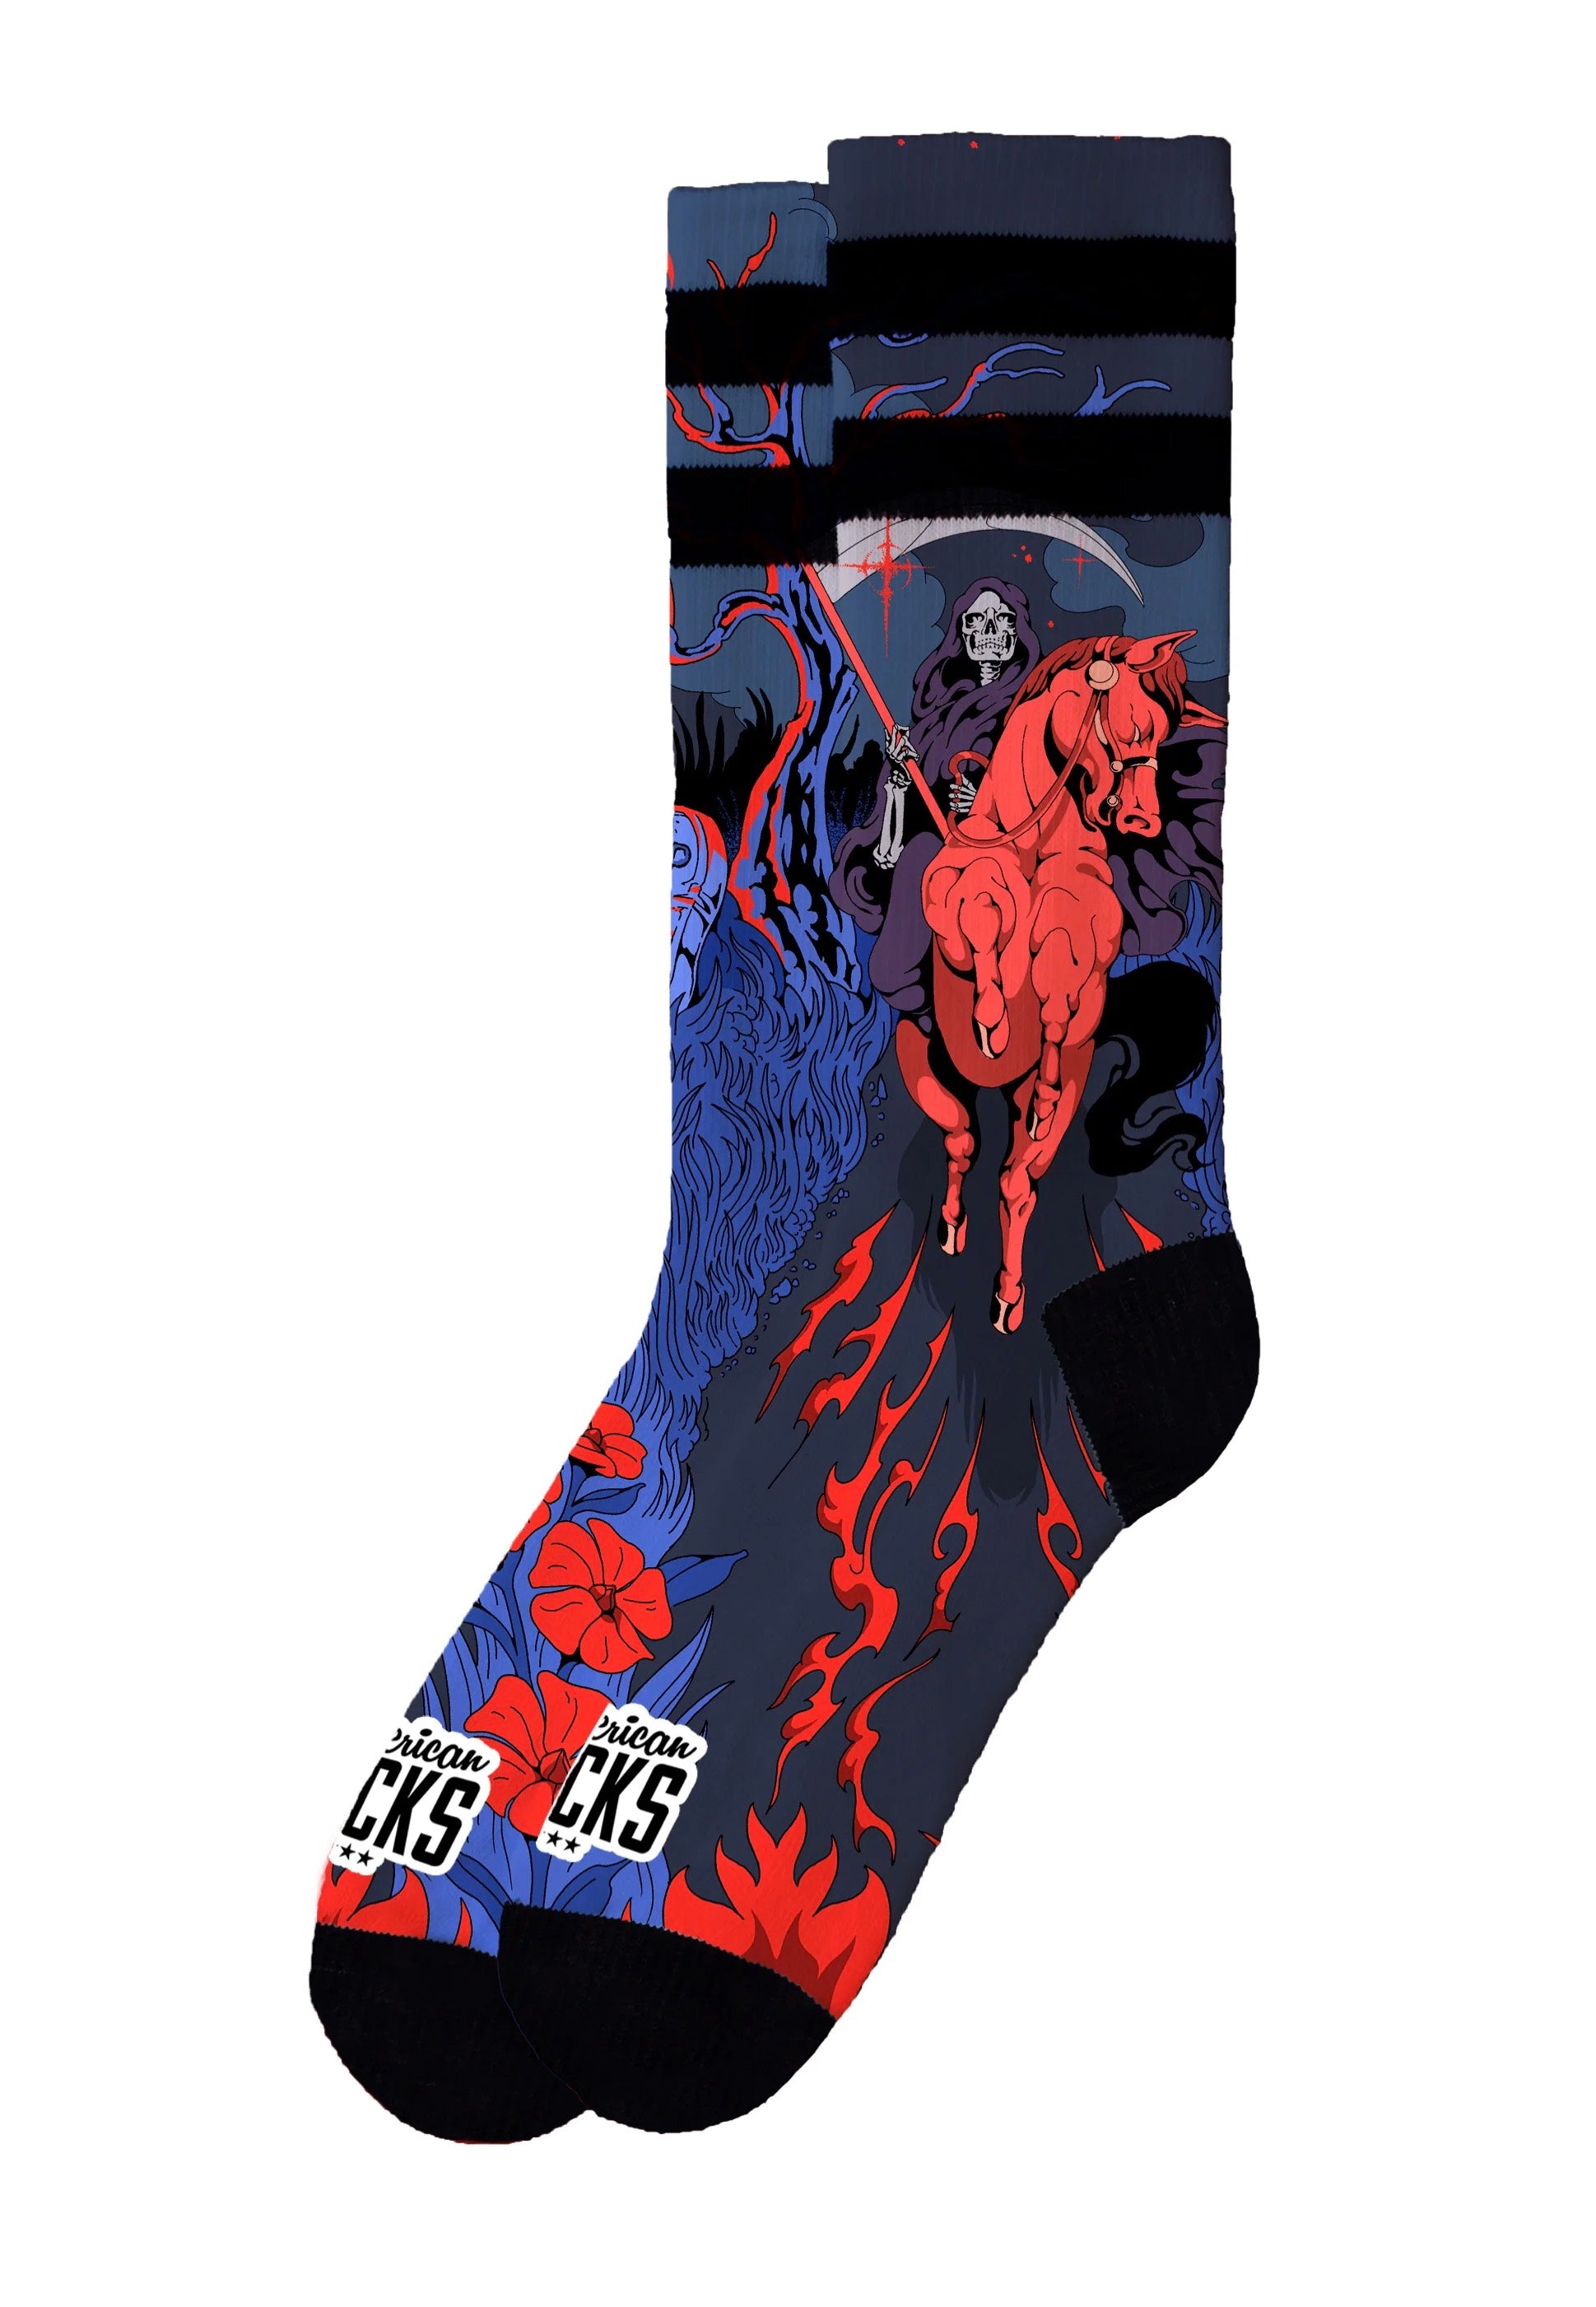 American Socks - Reaper Mid High Black - Socks